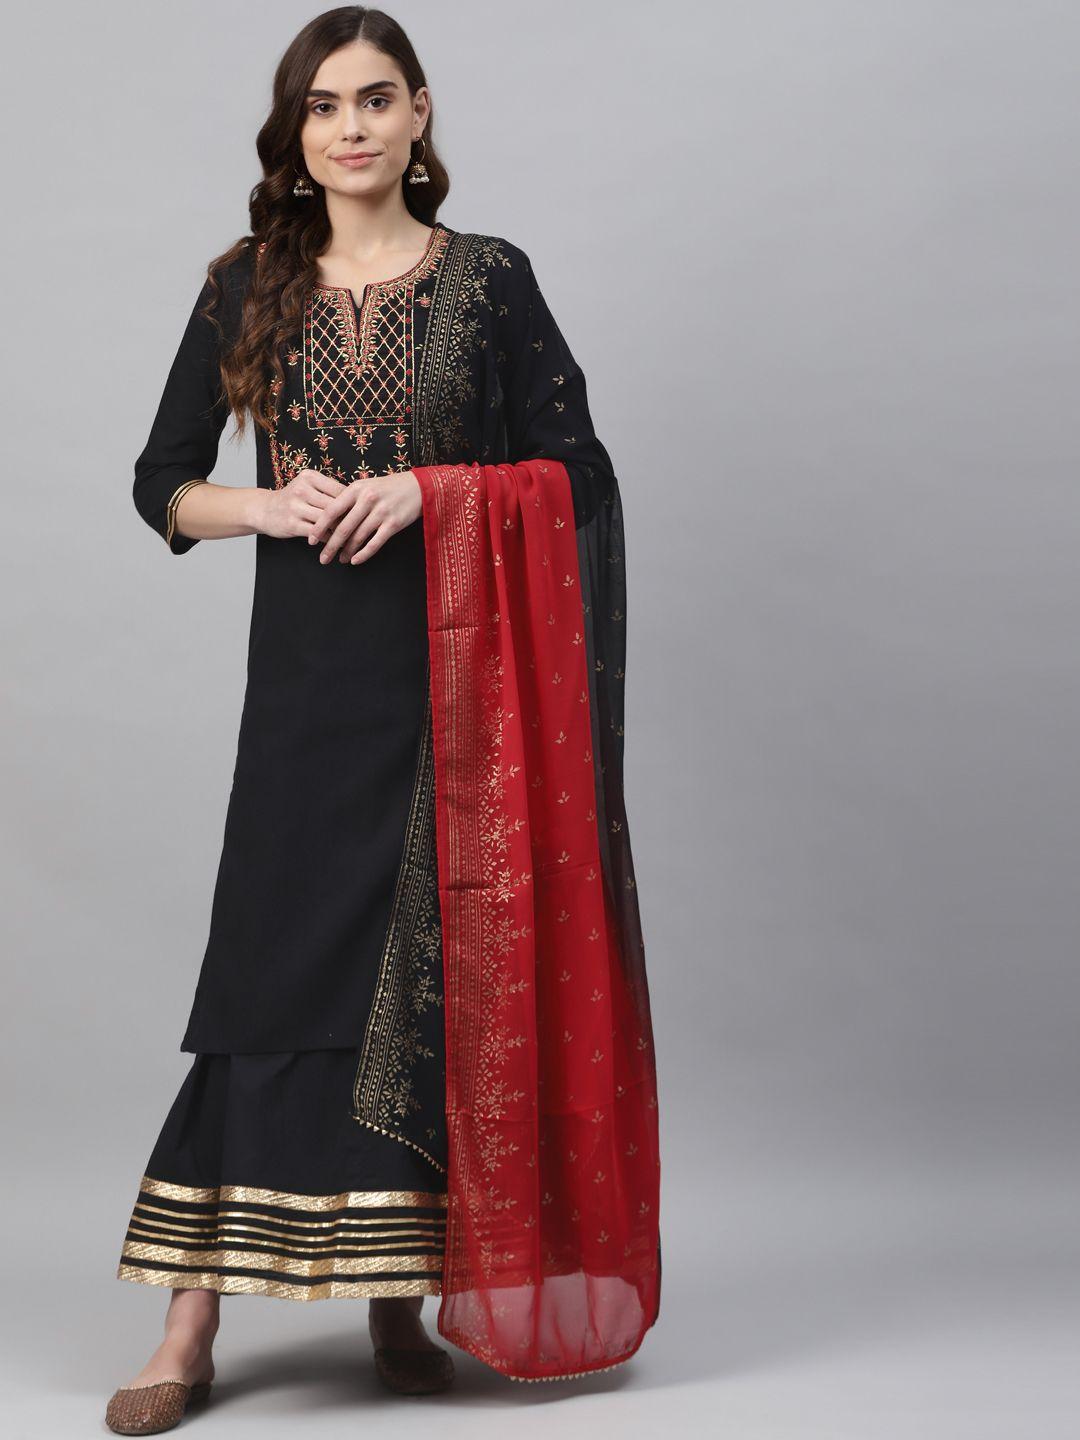 rangriti women black floral embroidered regular pure cotton kurta with skirt & with dupatta